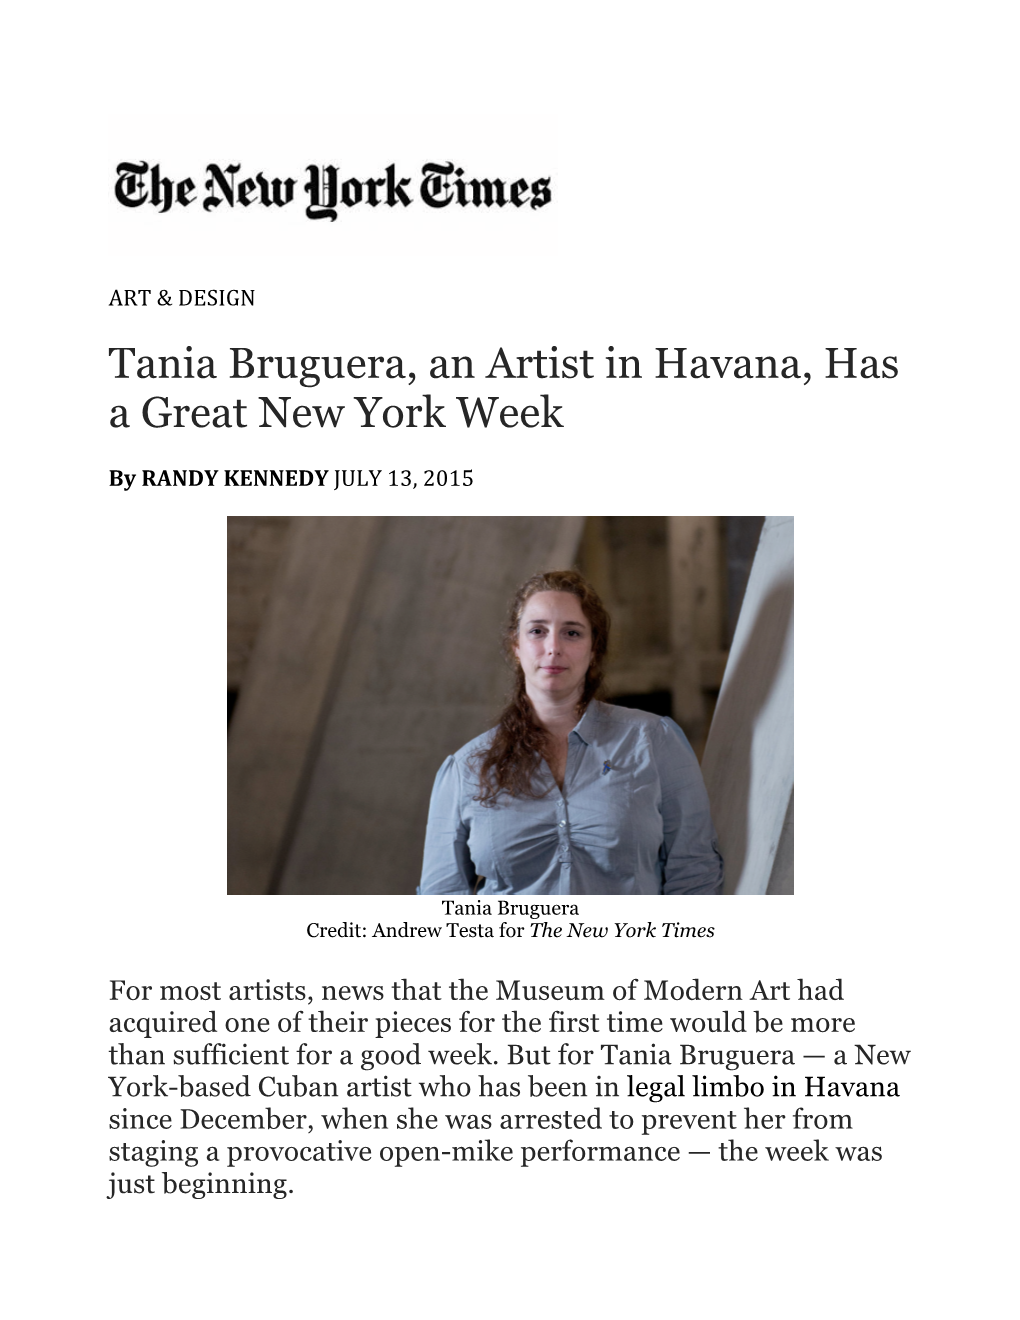 Tania Bruguera, an Artist in Havana, Has a Great New York Week